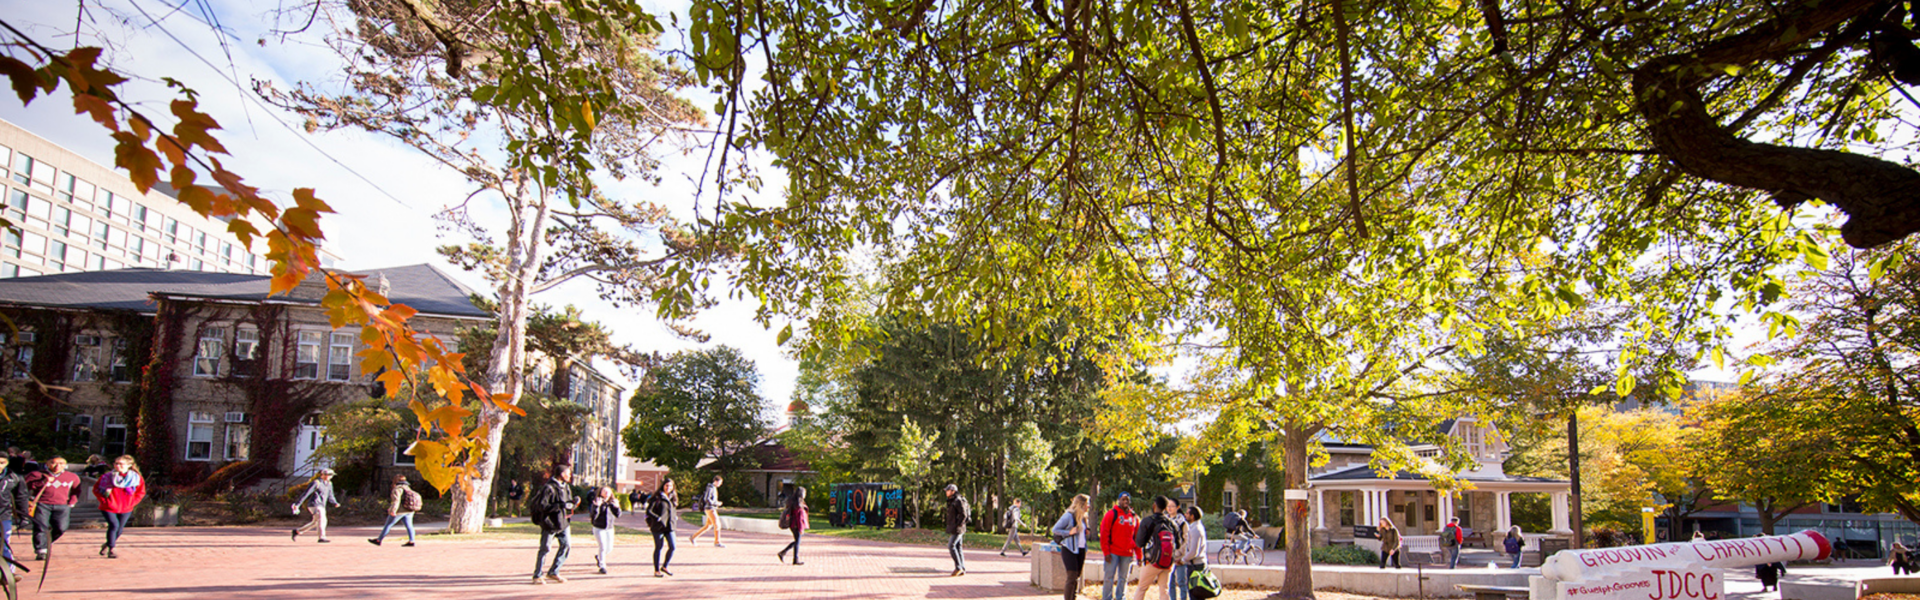 Students walk across Branion Plaza in fall.